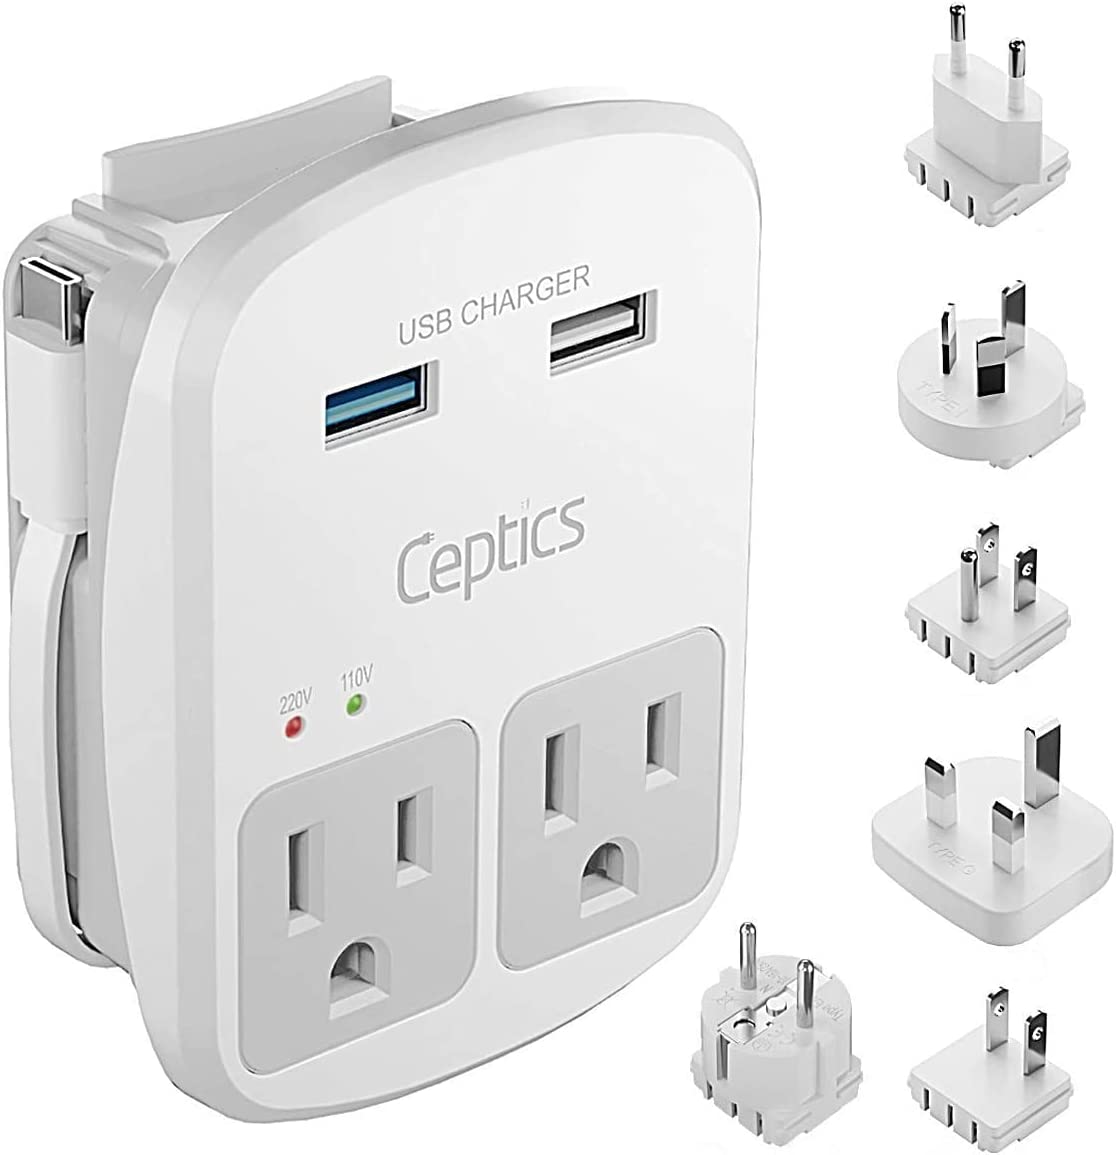 Ceptics World Travel Adapter Kit - QC 3.0 2 USB + 2 US Outlets, Surge Protection, Plugs for Europe, UK, China, Australia, Japan